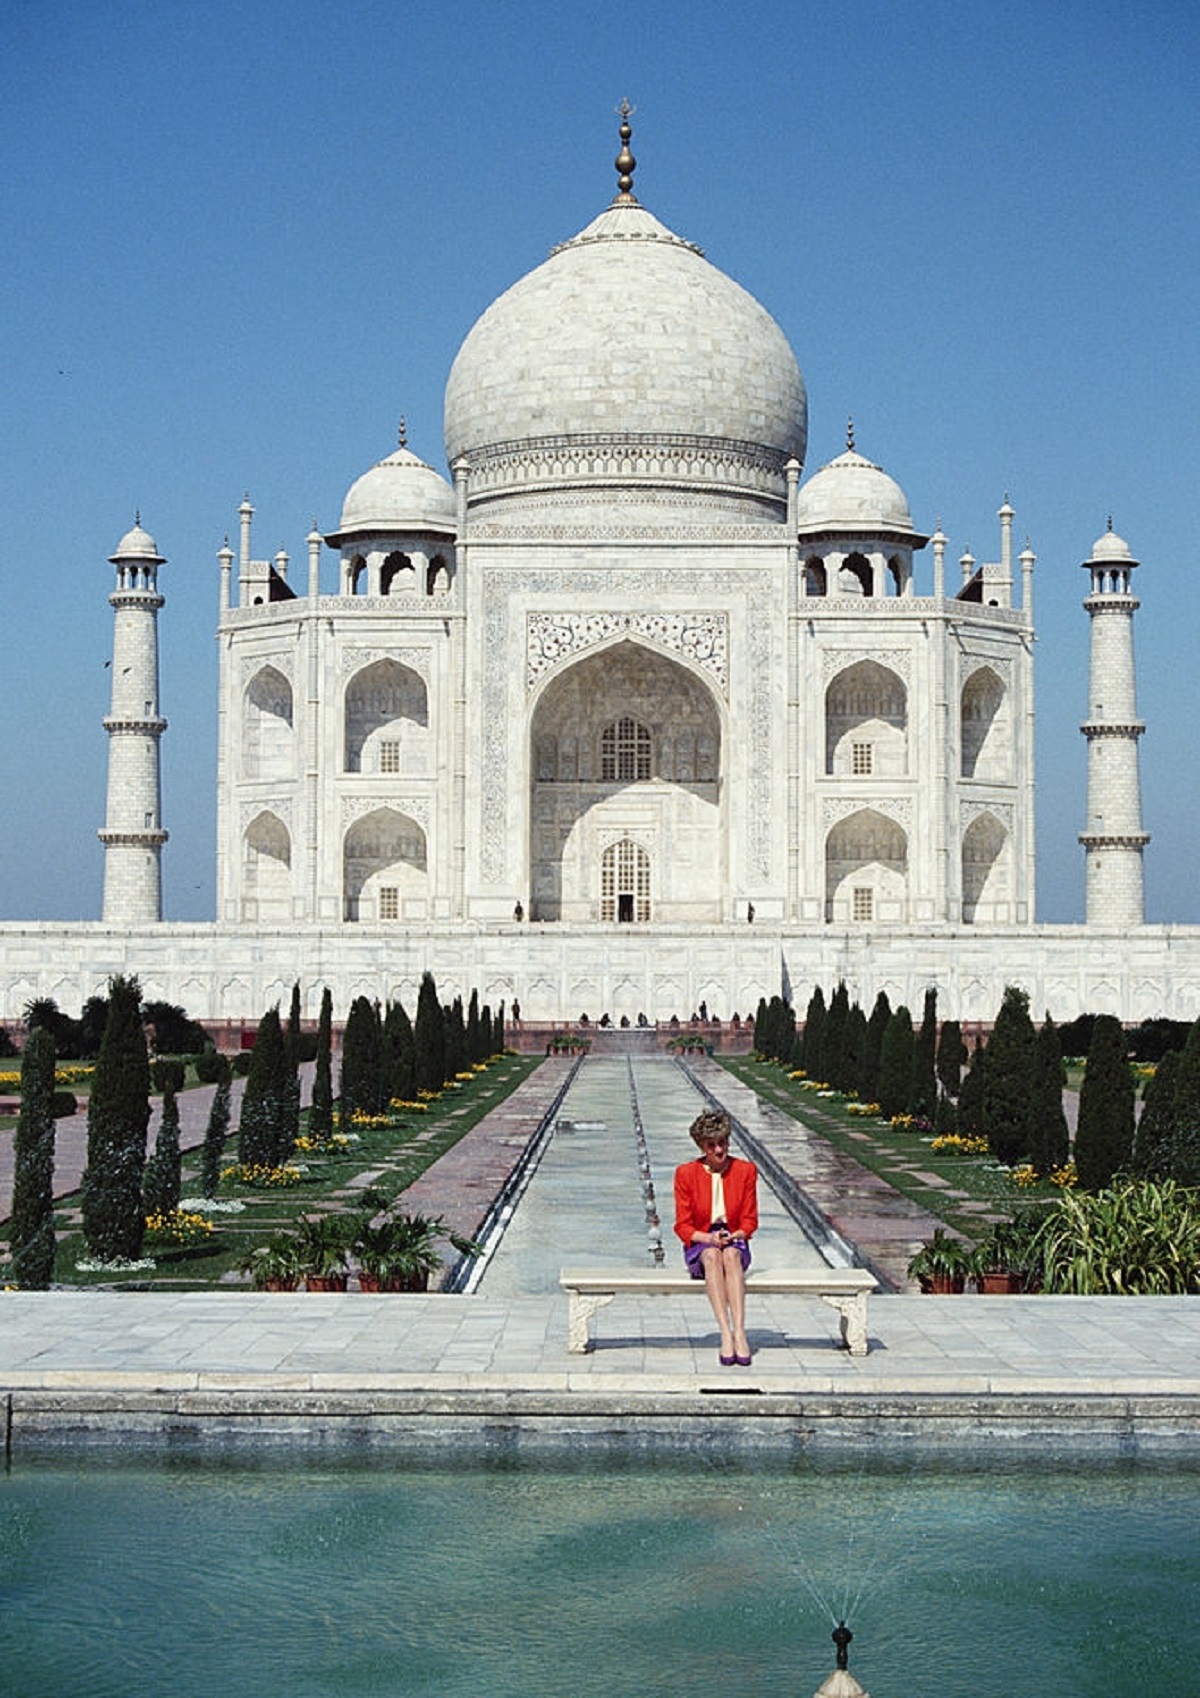 Princess Diana sitting alone in front of the Taj Mahal